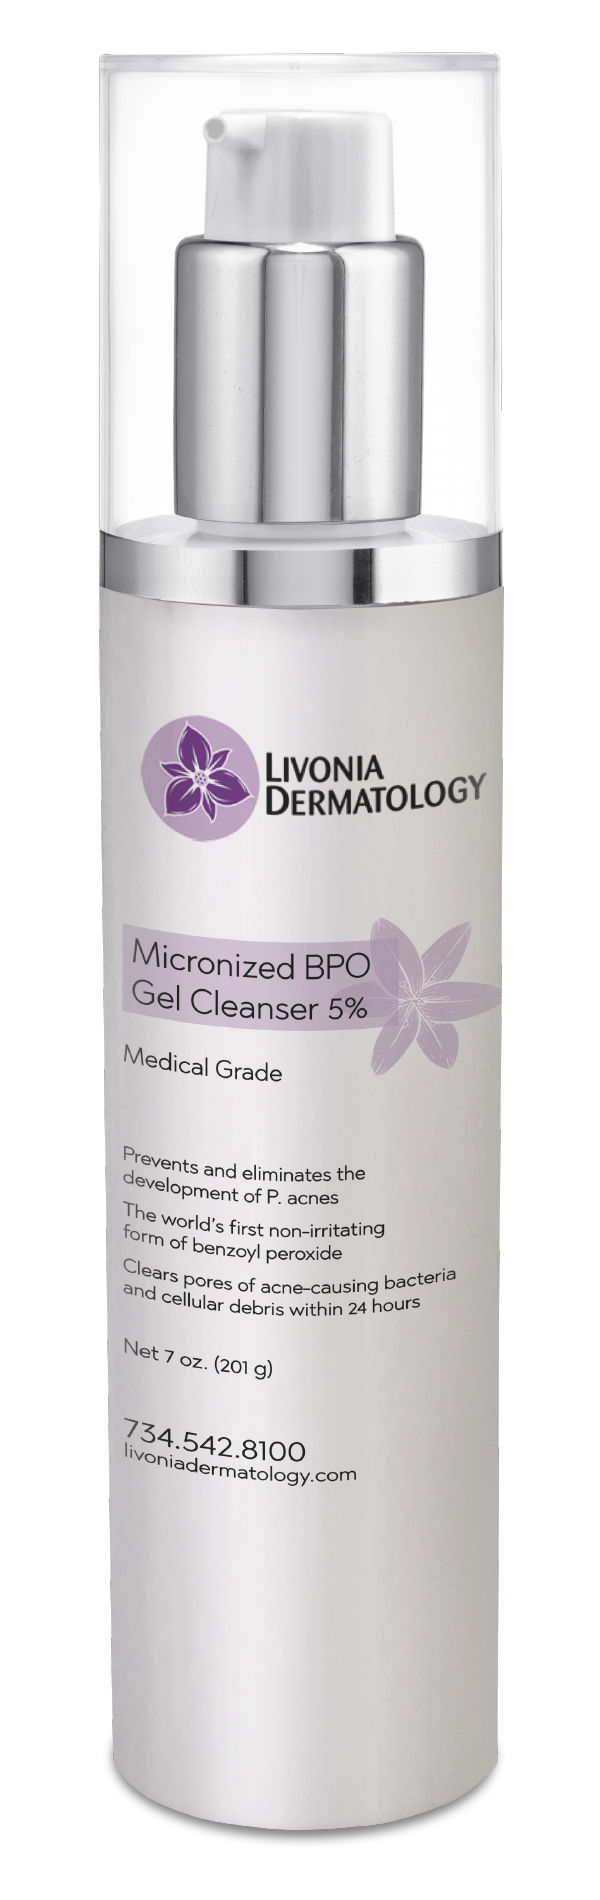 Micronized BPO Gel Cleanser 5%